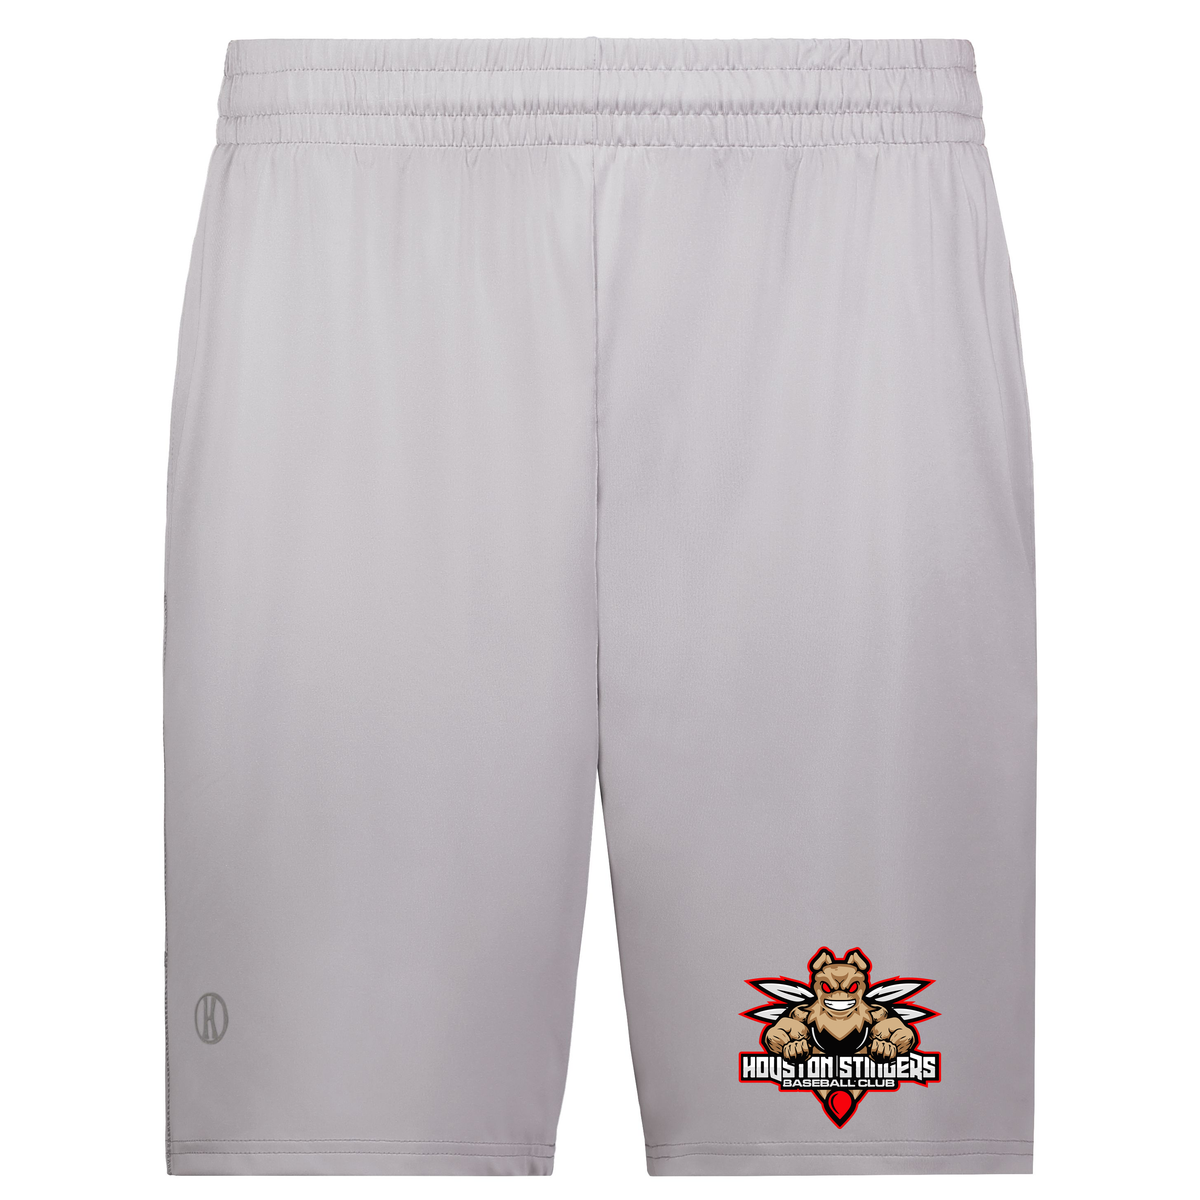 Houston Stingers Baseball Club CoolCore Shorts